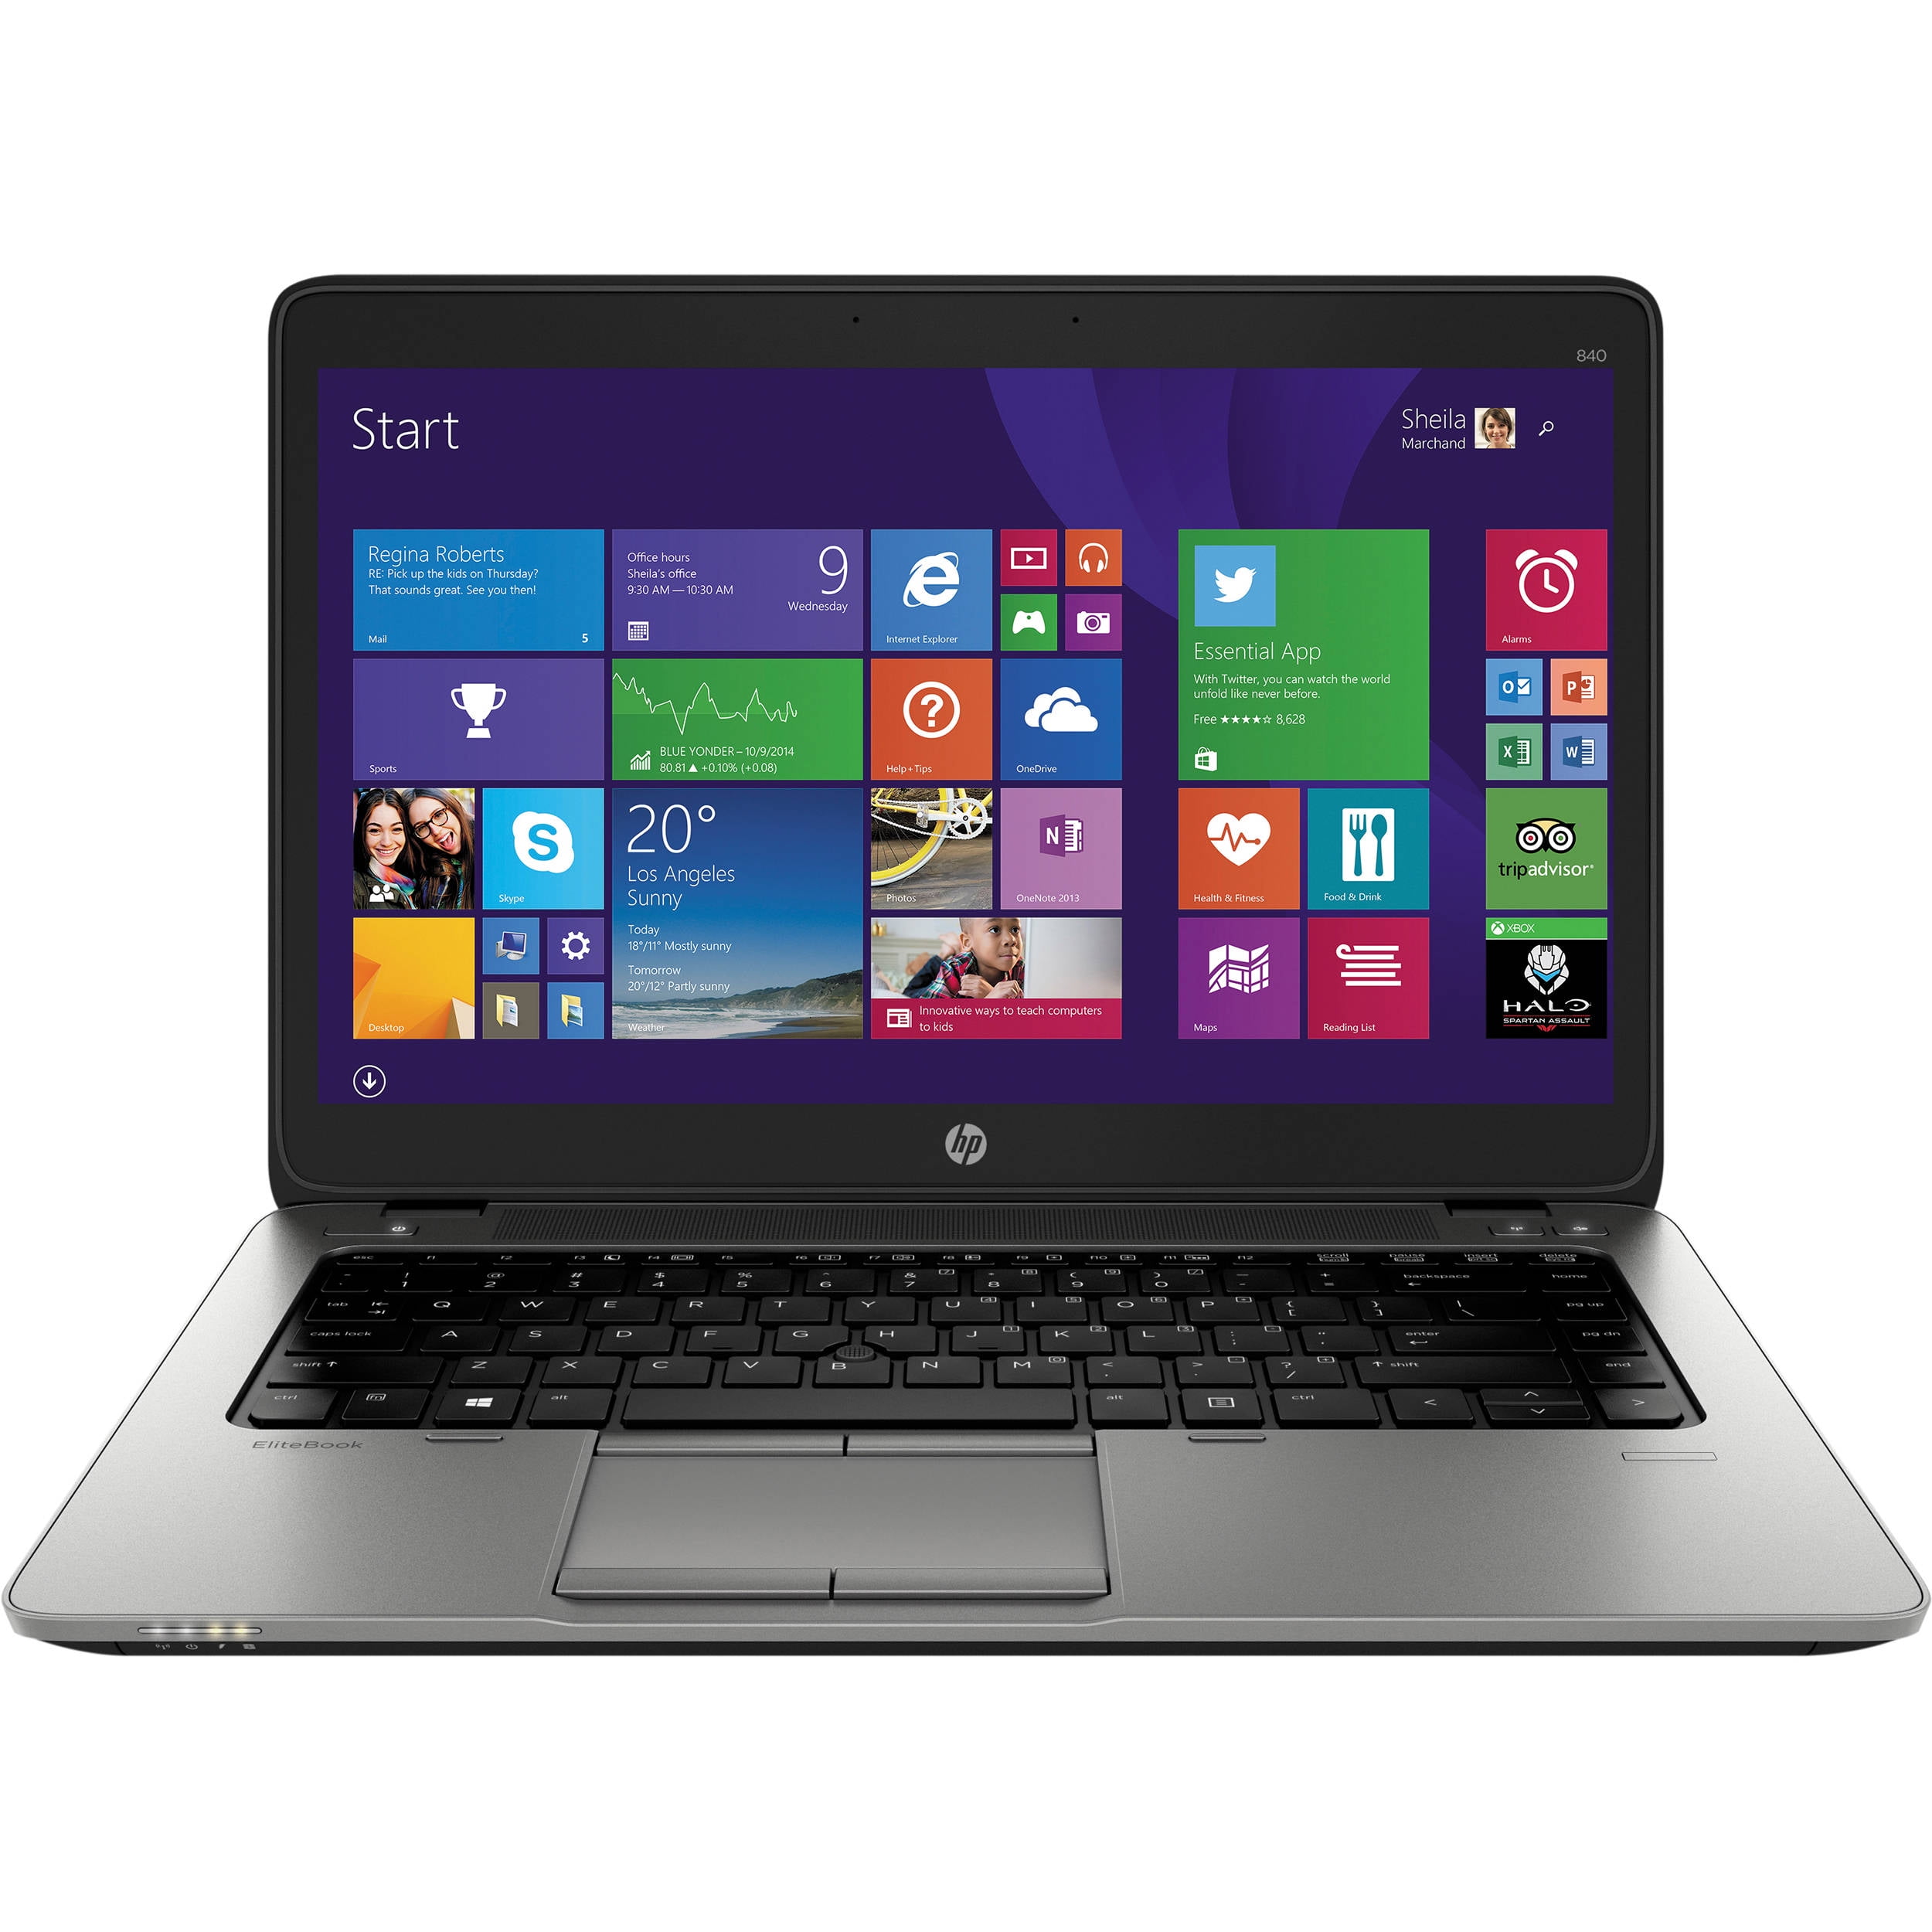 Windows 7 Professional 64 Loaded for HP EliteBook 840 G2 NEW 1TB Hard Drive 